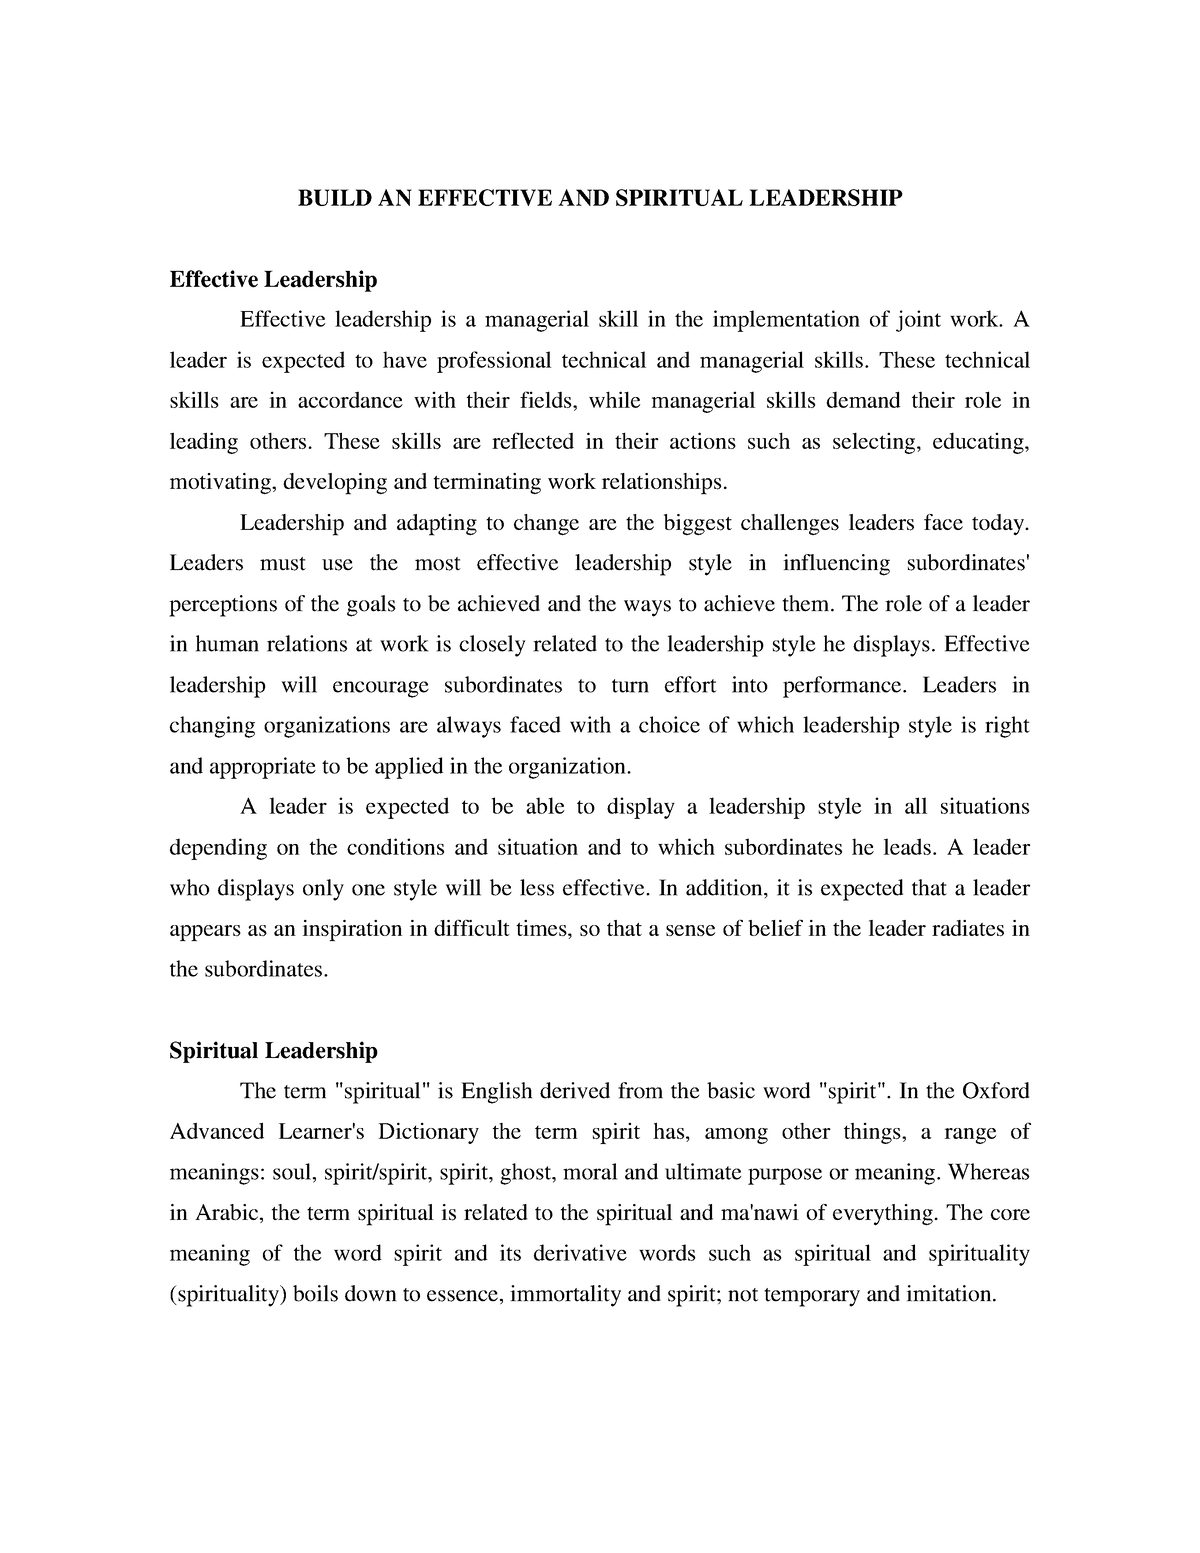 research paper on spiritual leadership